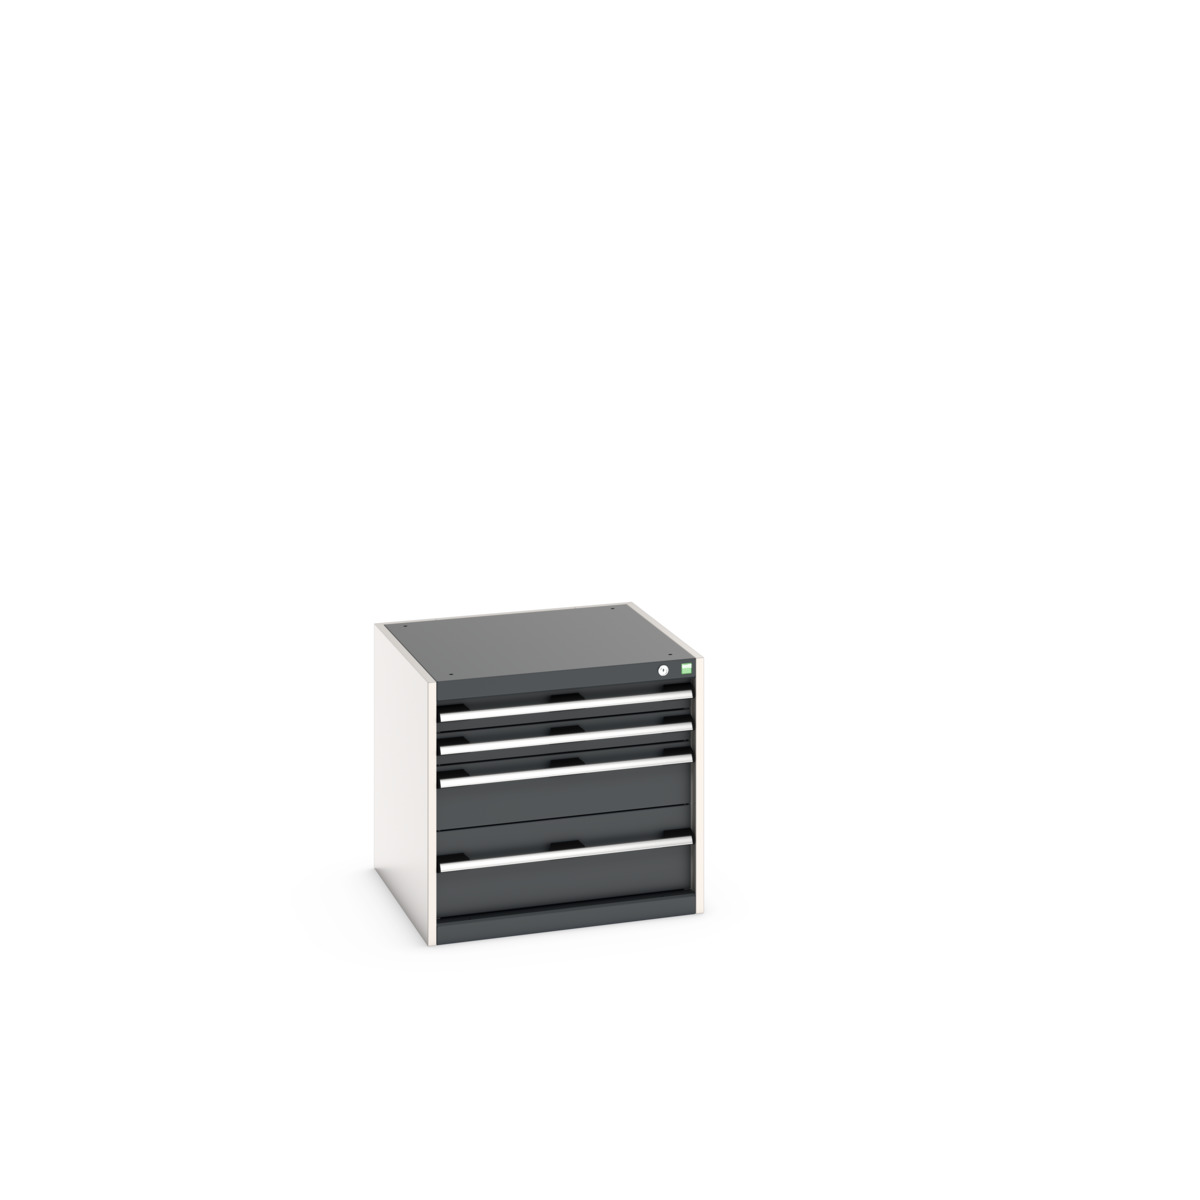 40019015. - cubio drawer cabinet